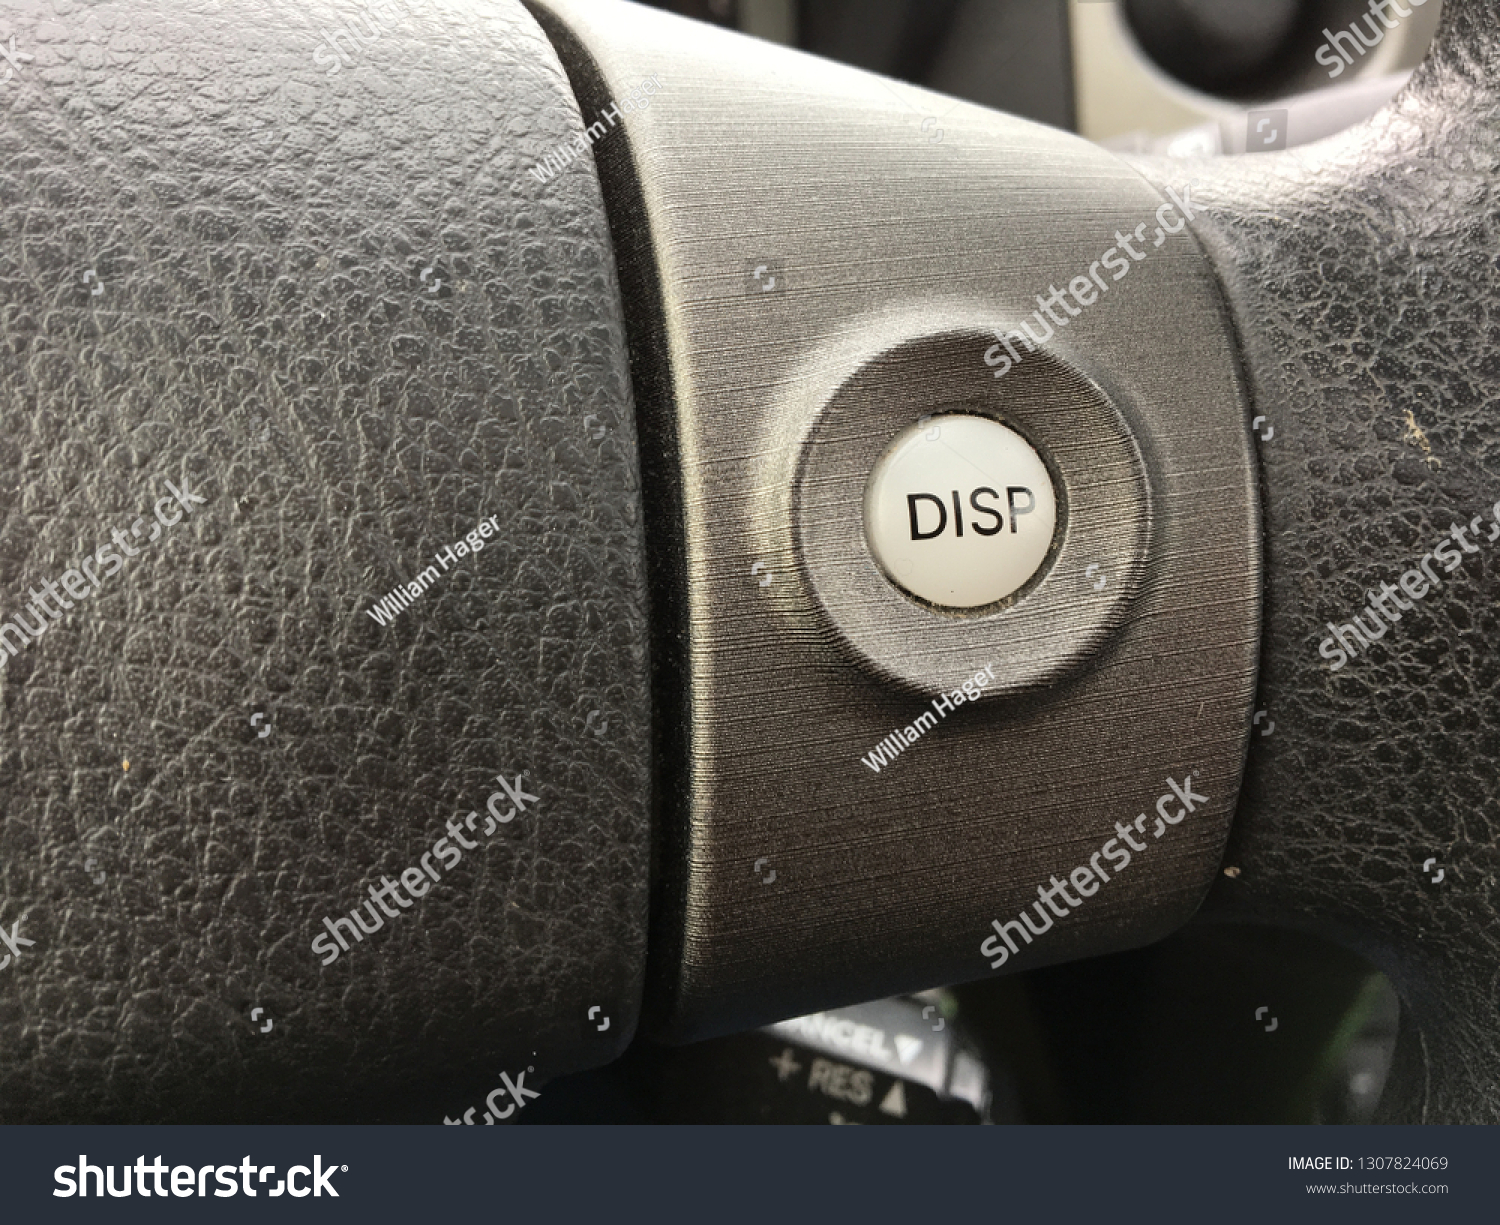 What Does Disp Mean In A Car? CarCaramEL